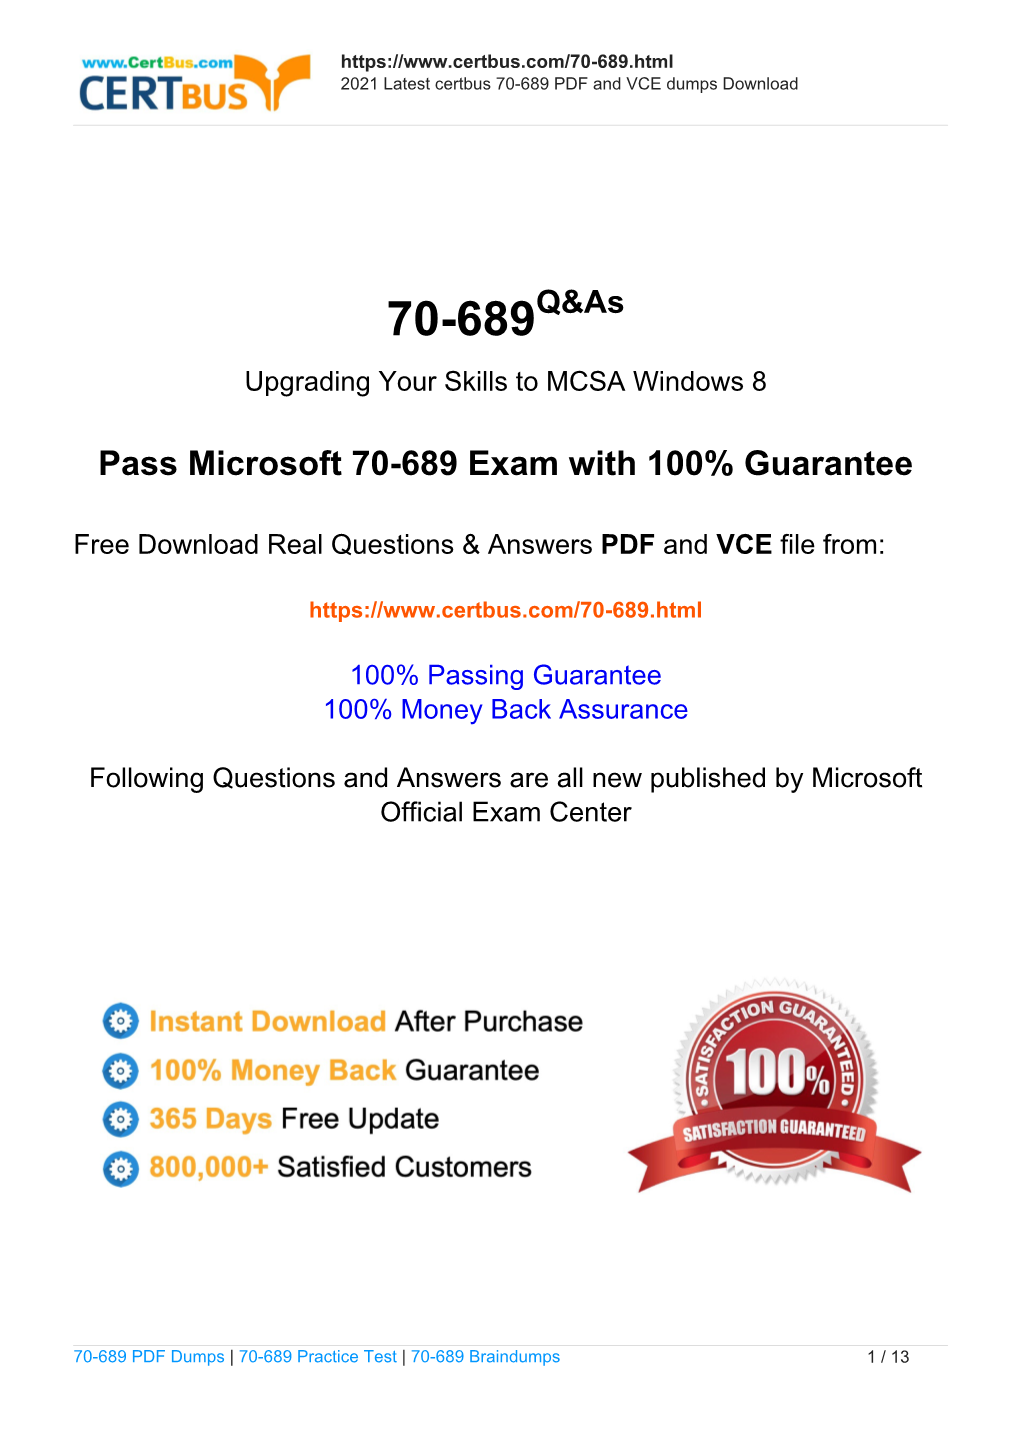 Pass Microsoft 70-689 Exam with 100% Guarantee